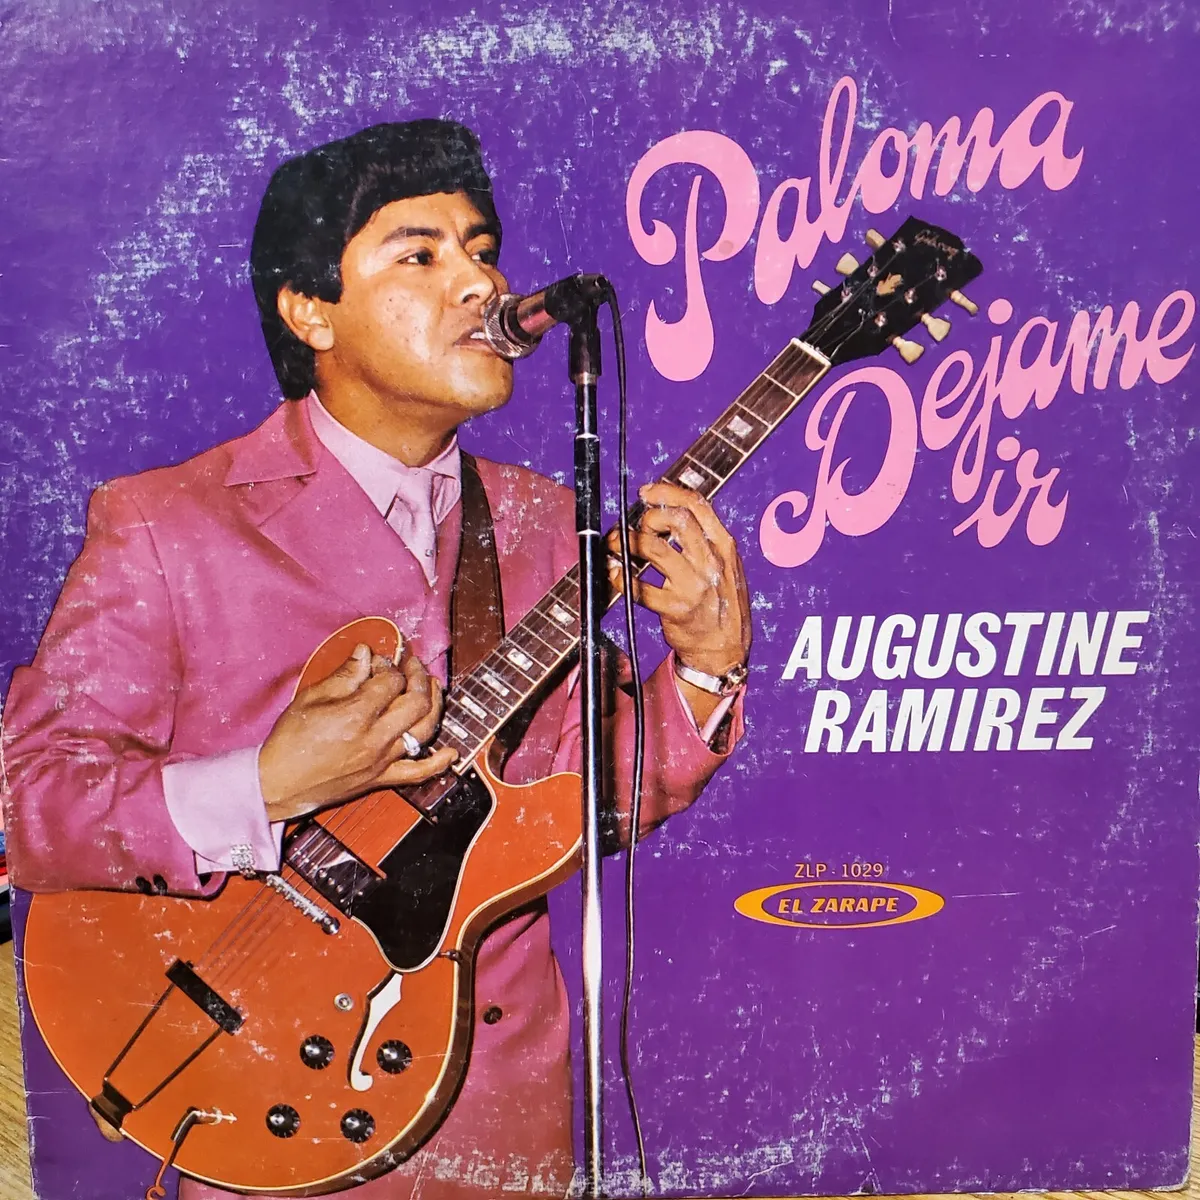 Augustine Ramirez alive and kicking